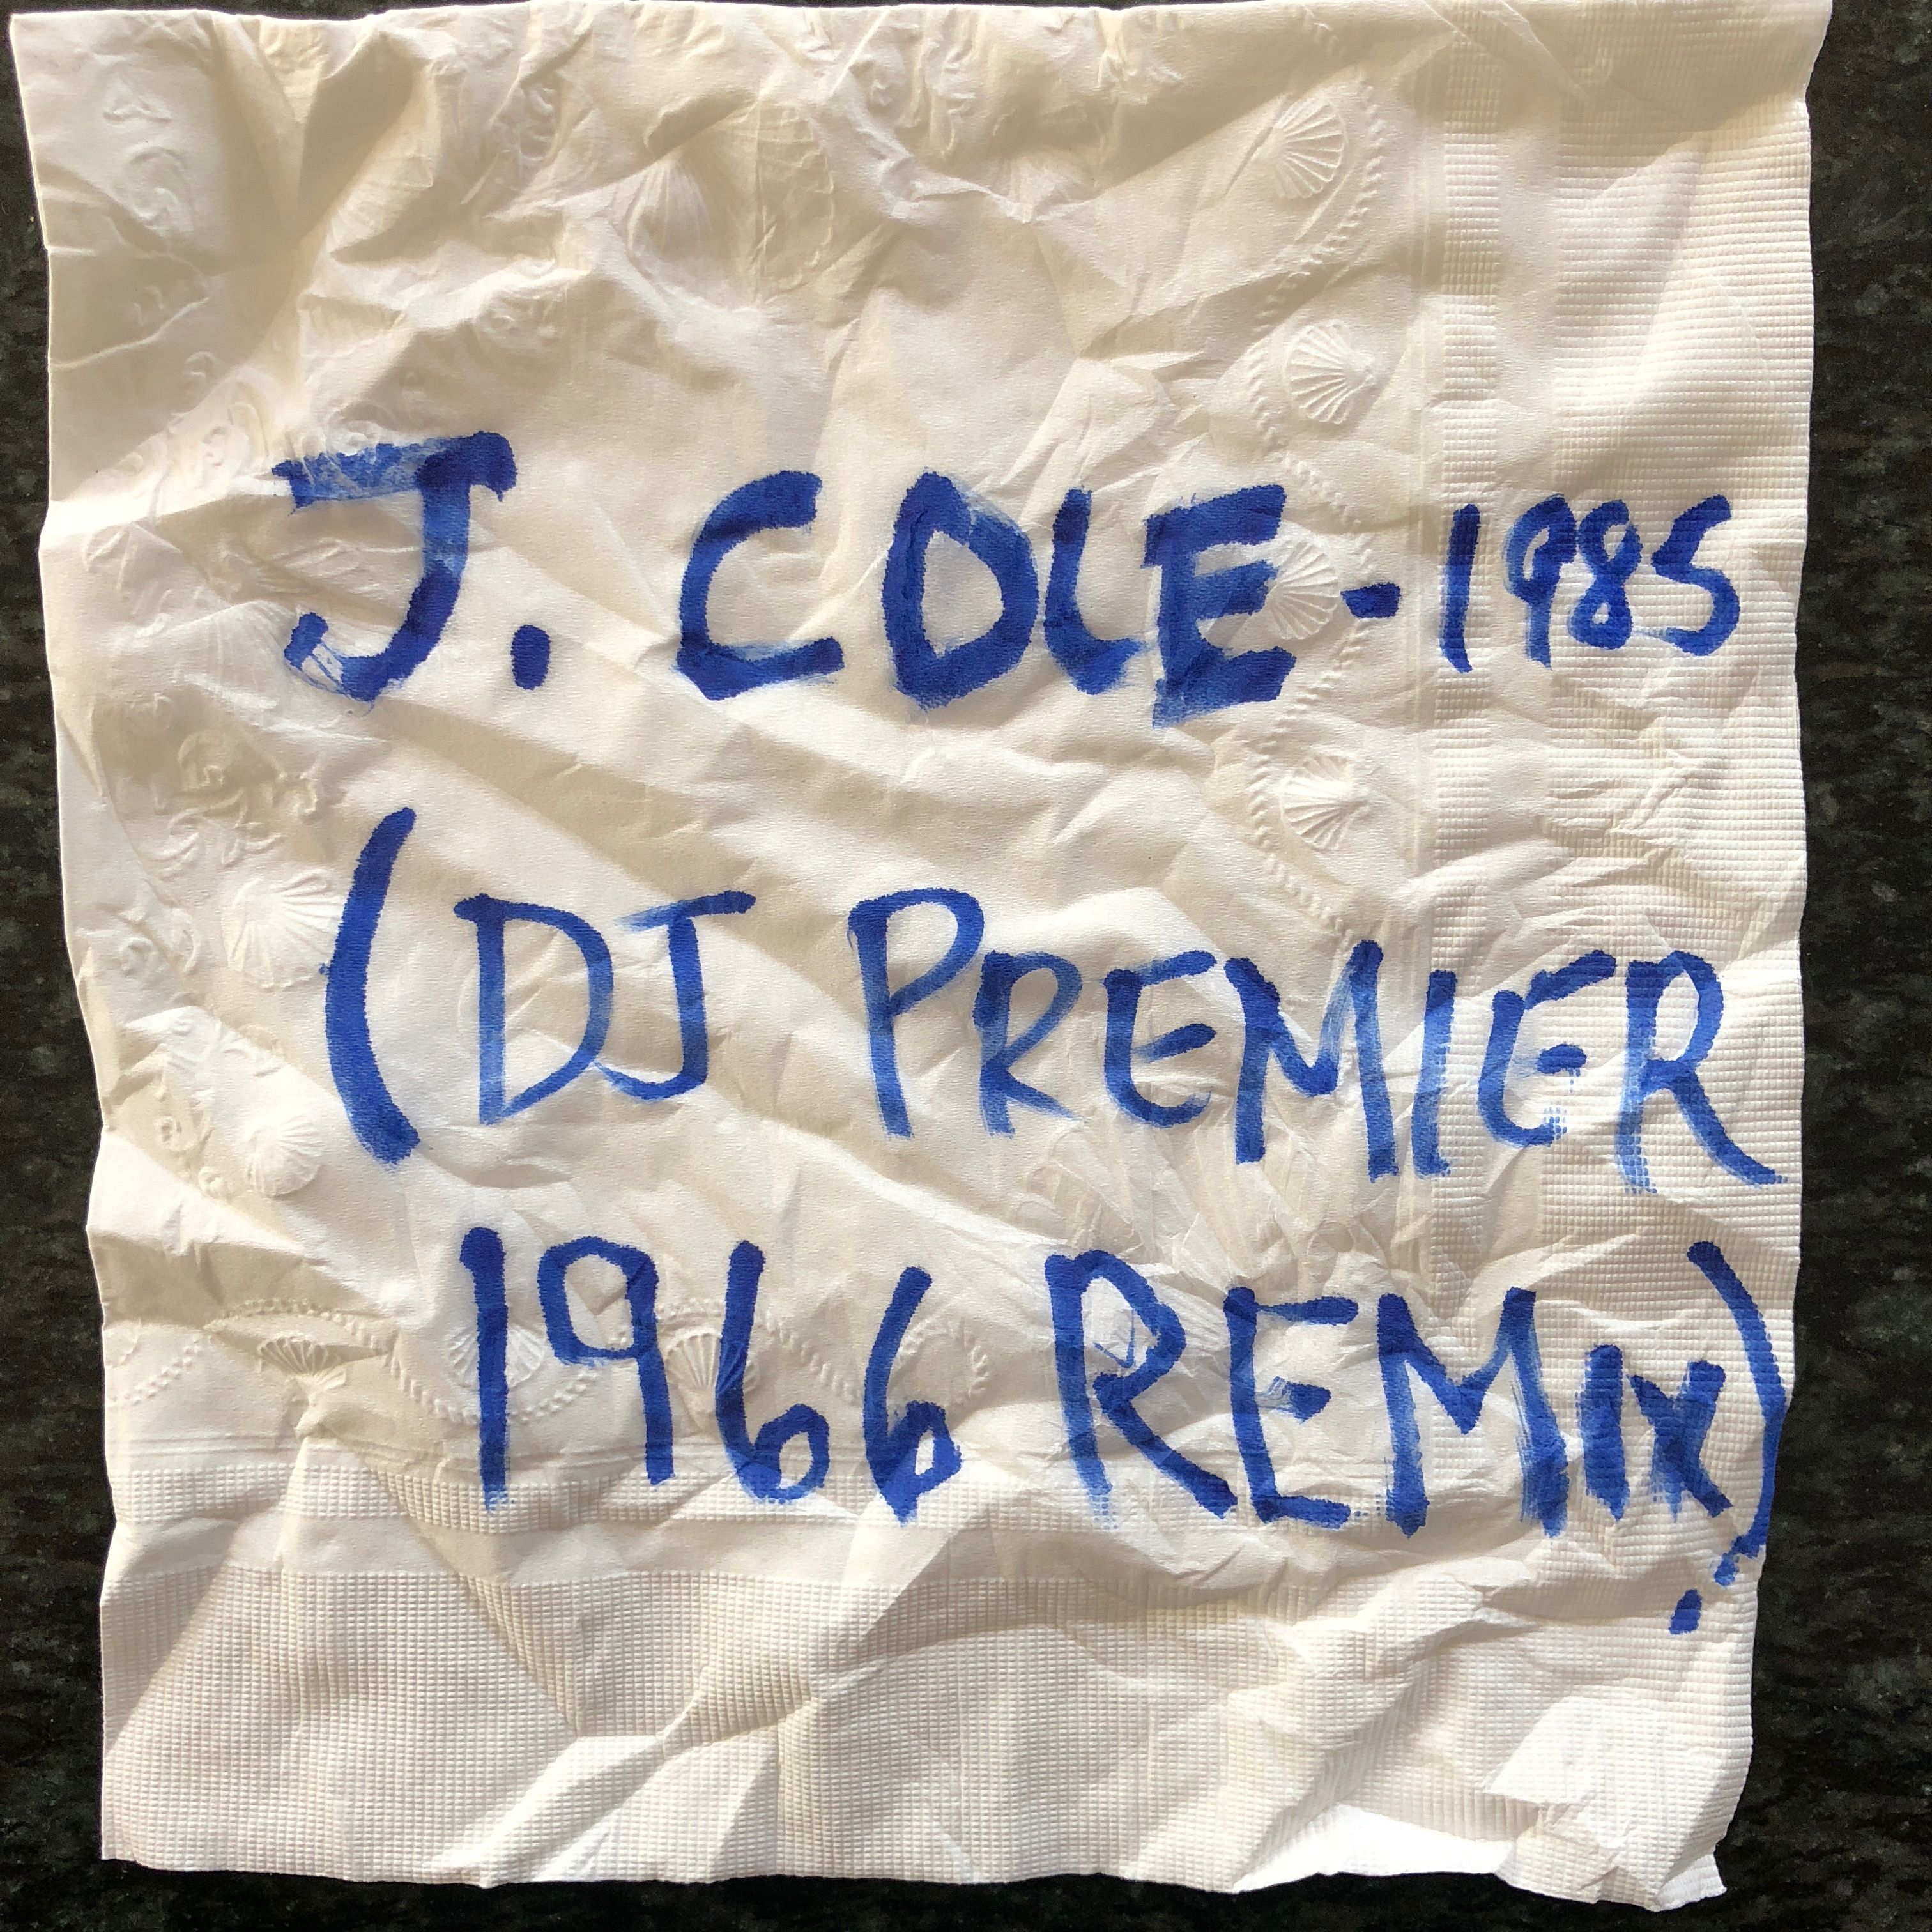 J. Cole – 1985 (DJ Premier Remix)